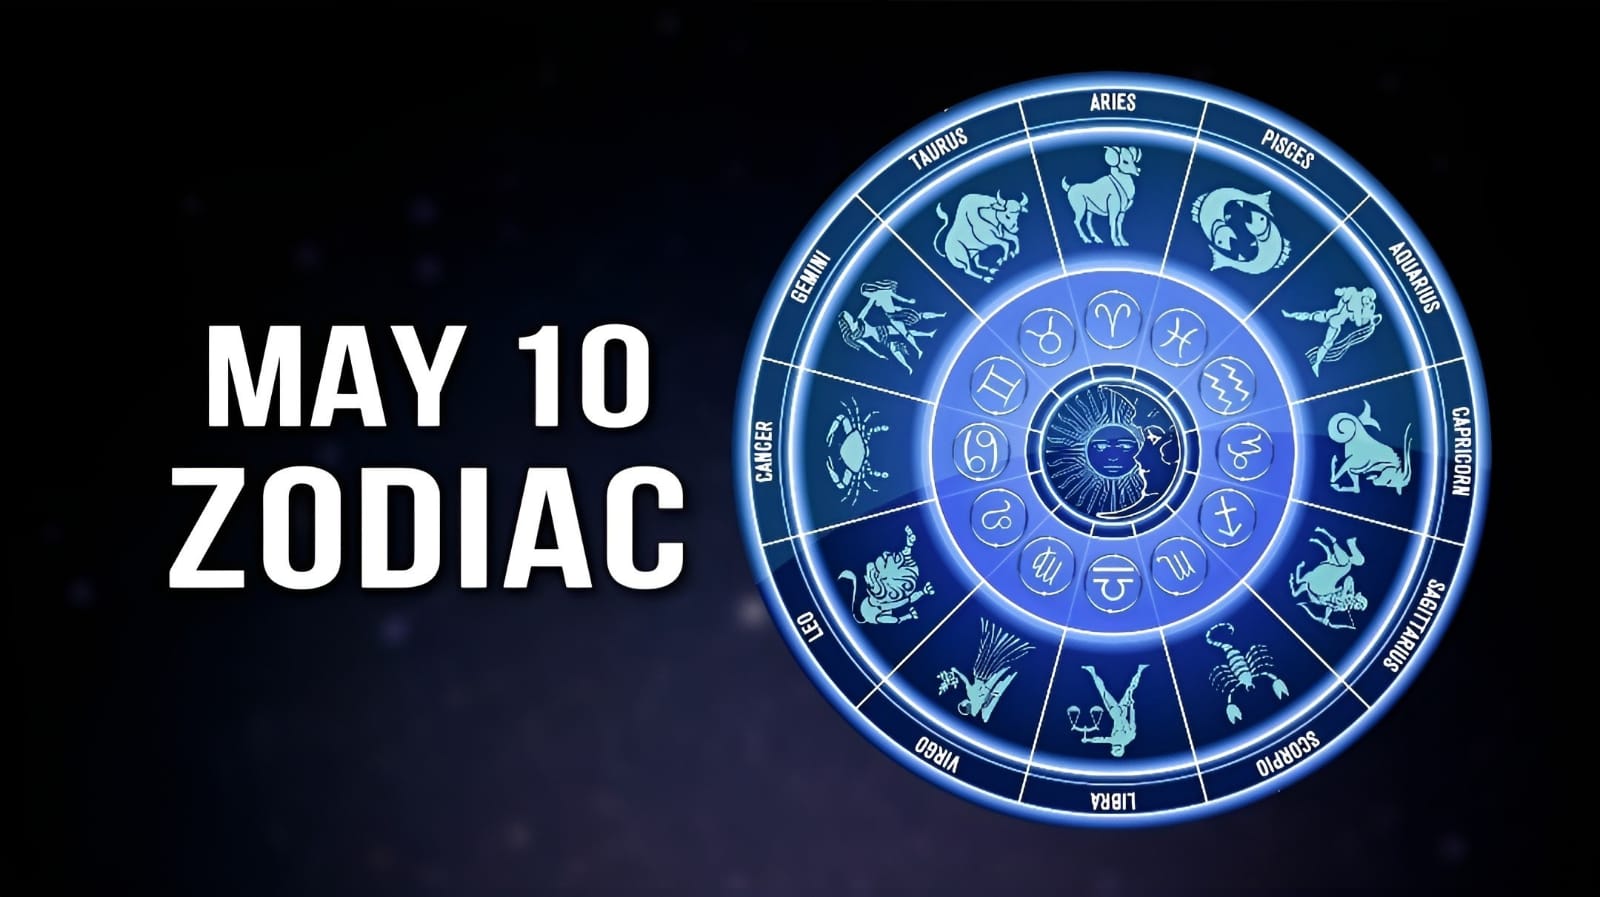 May 10 Zodiac